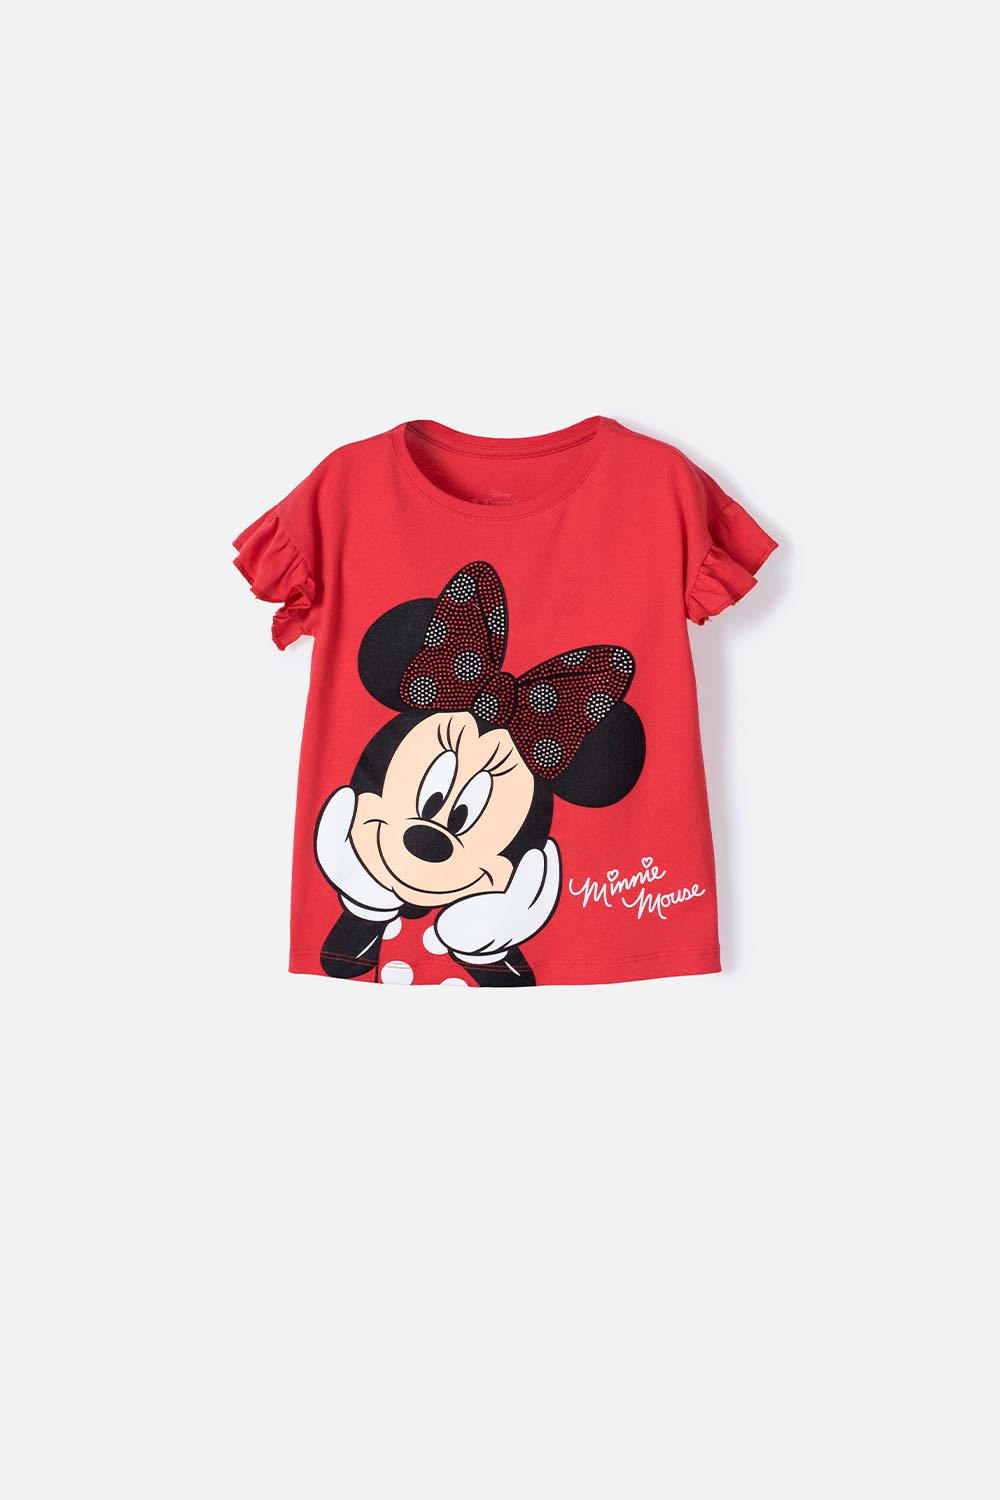 Camiseta de Minnie roja estampada para niña de 2T a 5T